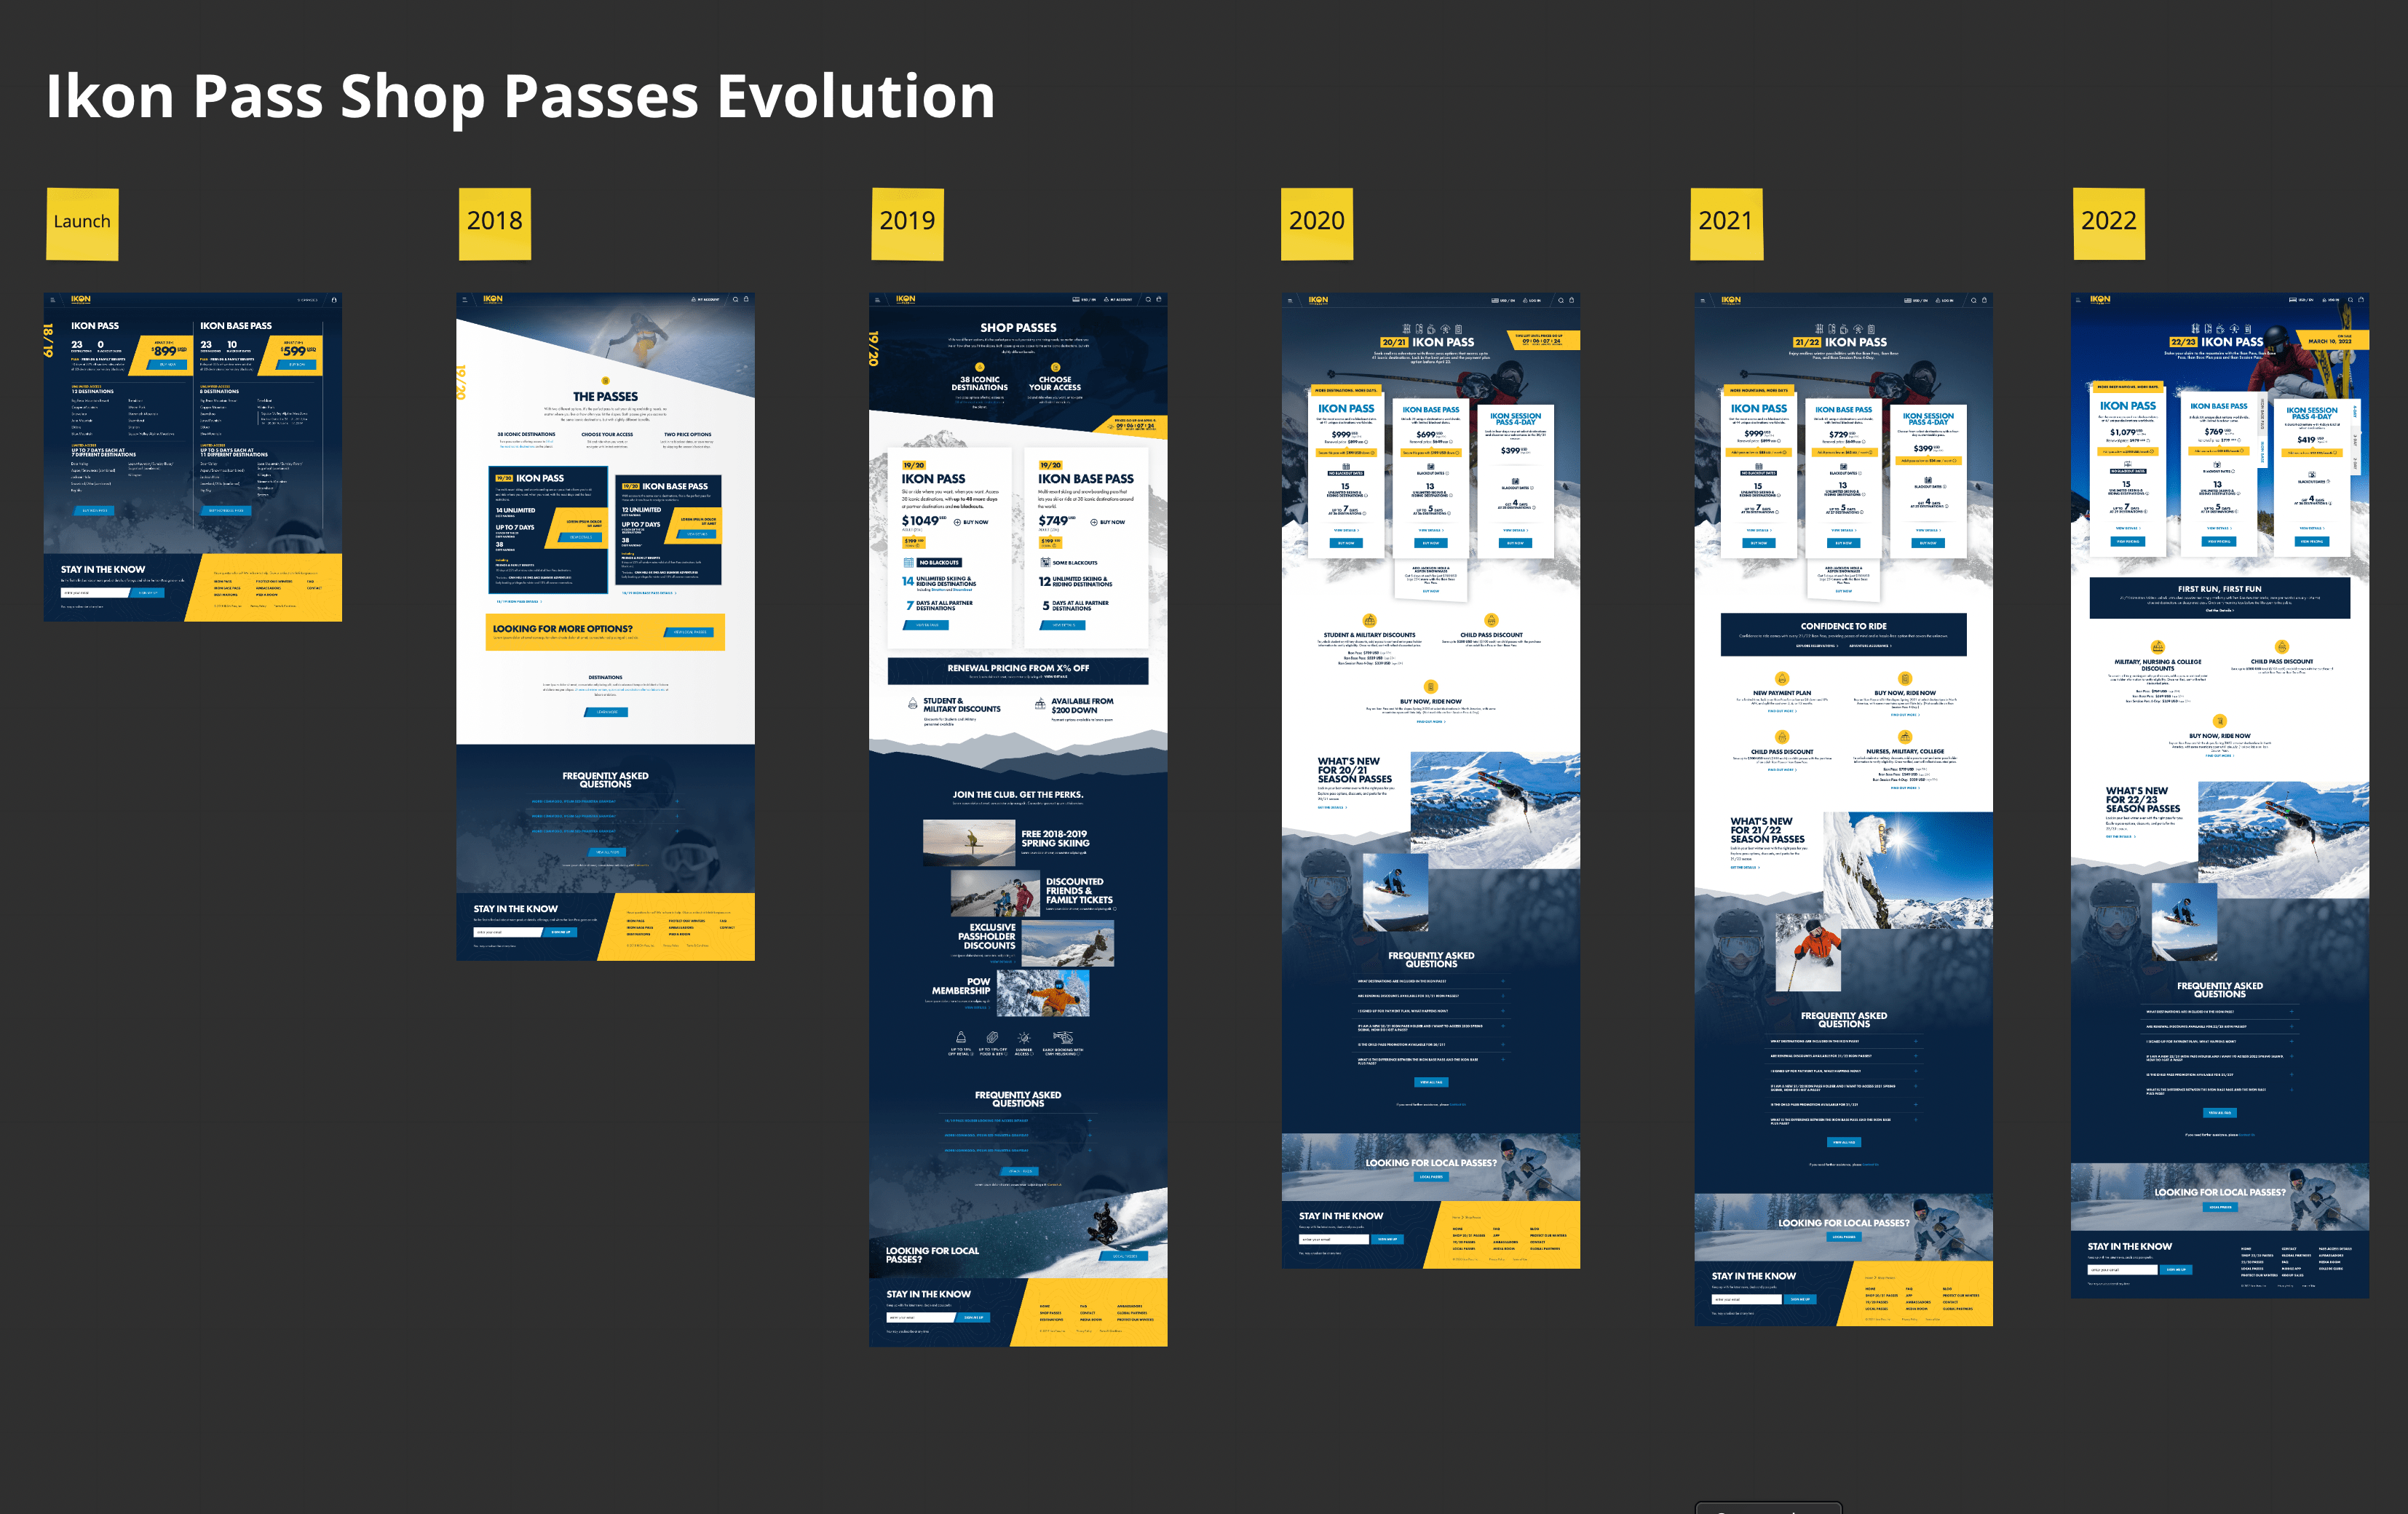 Ikon Pass Shop Passes Evolution